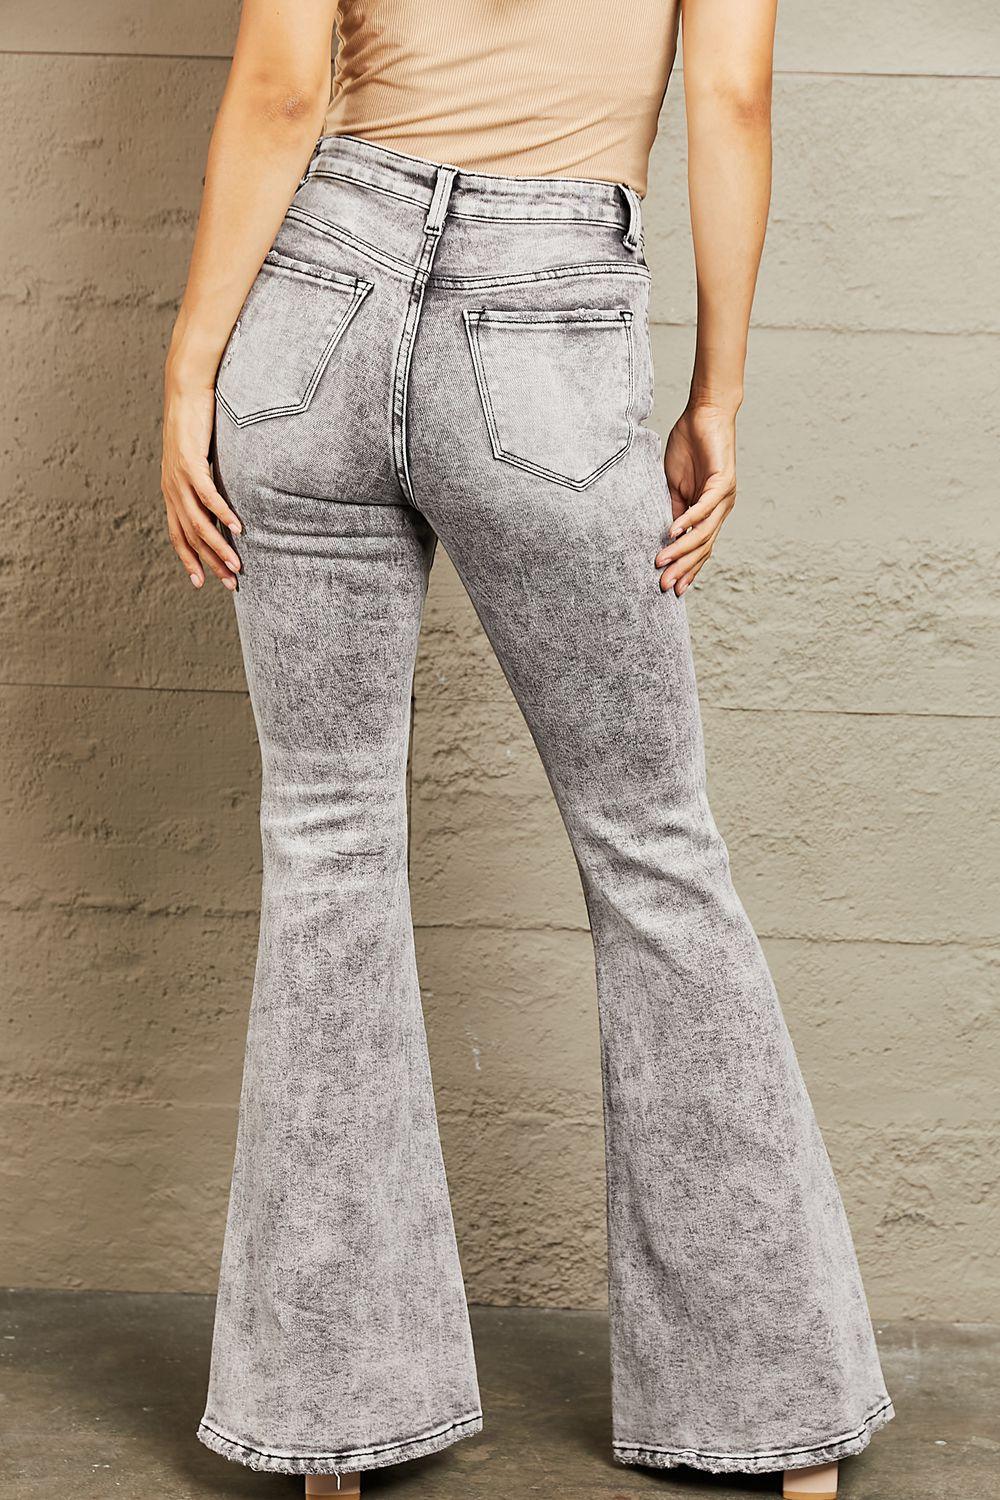 BAYEAS High Waisted Acid Wash Flare Jeans - Lab Fashion, Home & Health